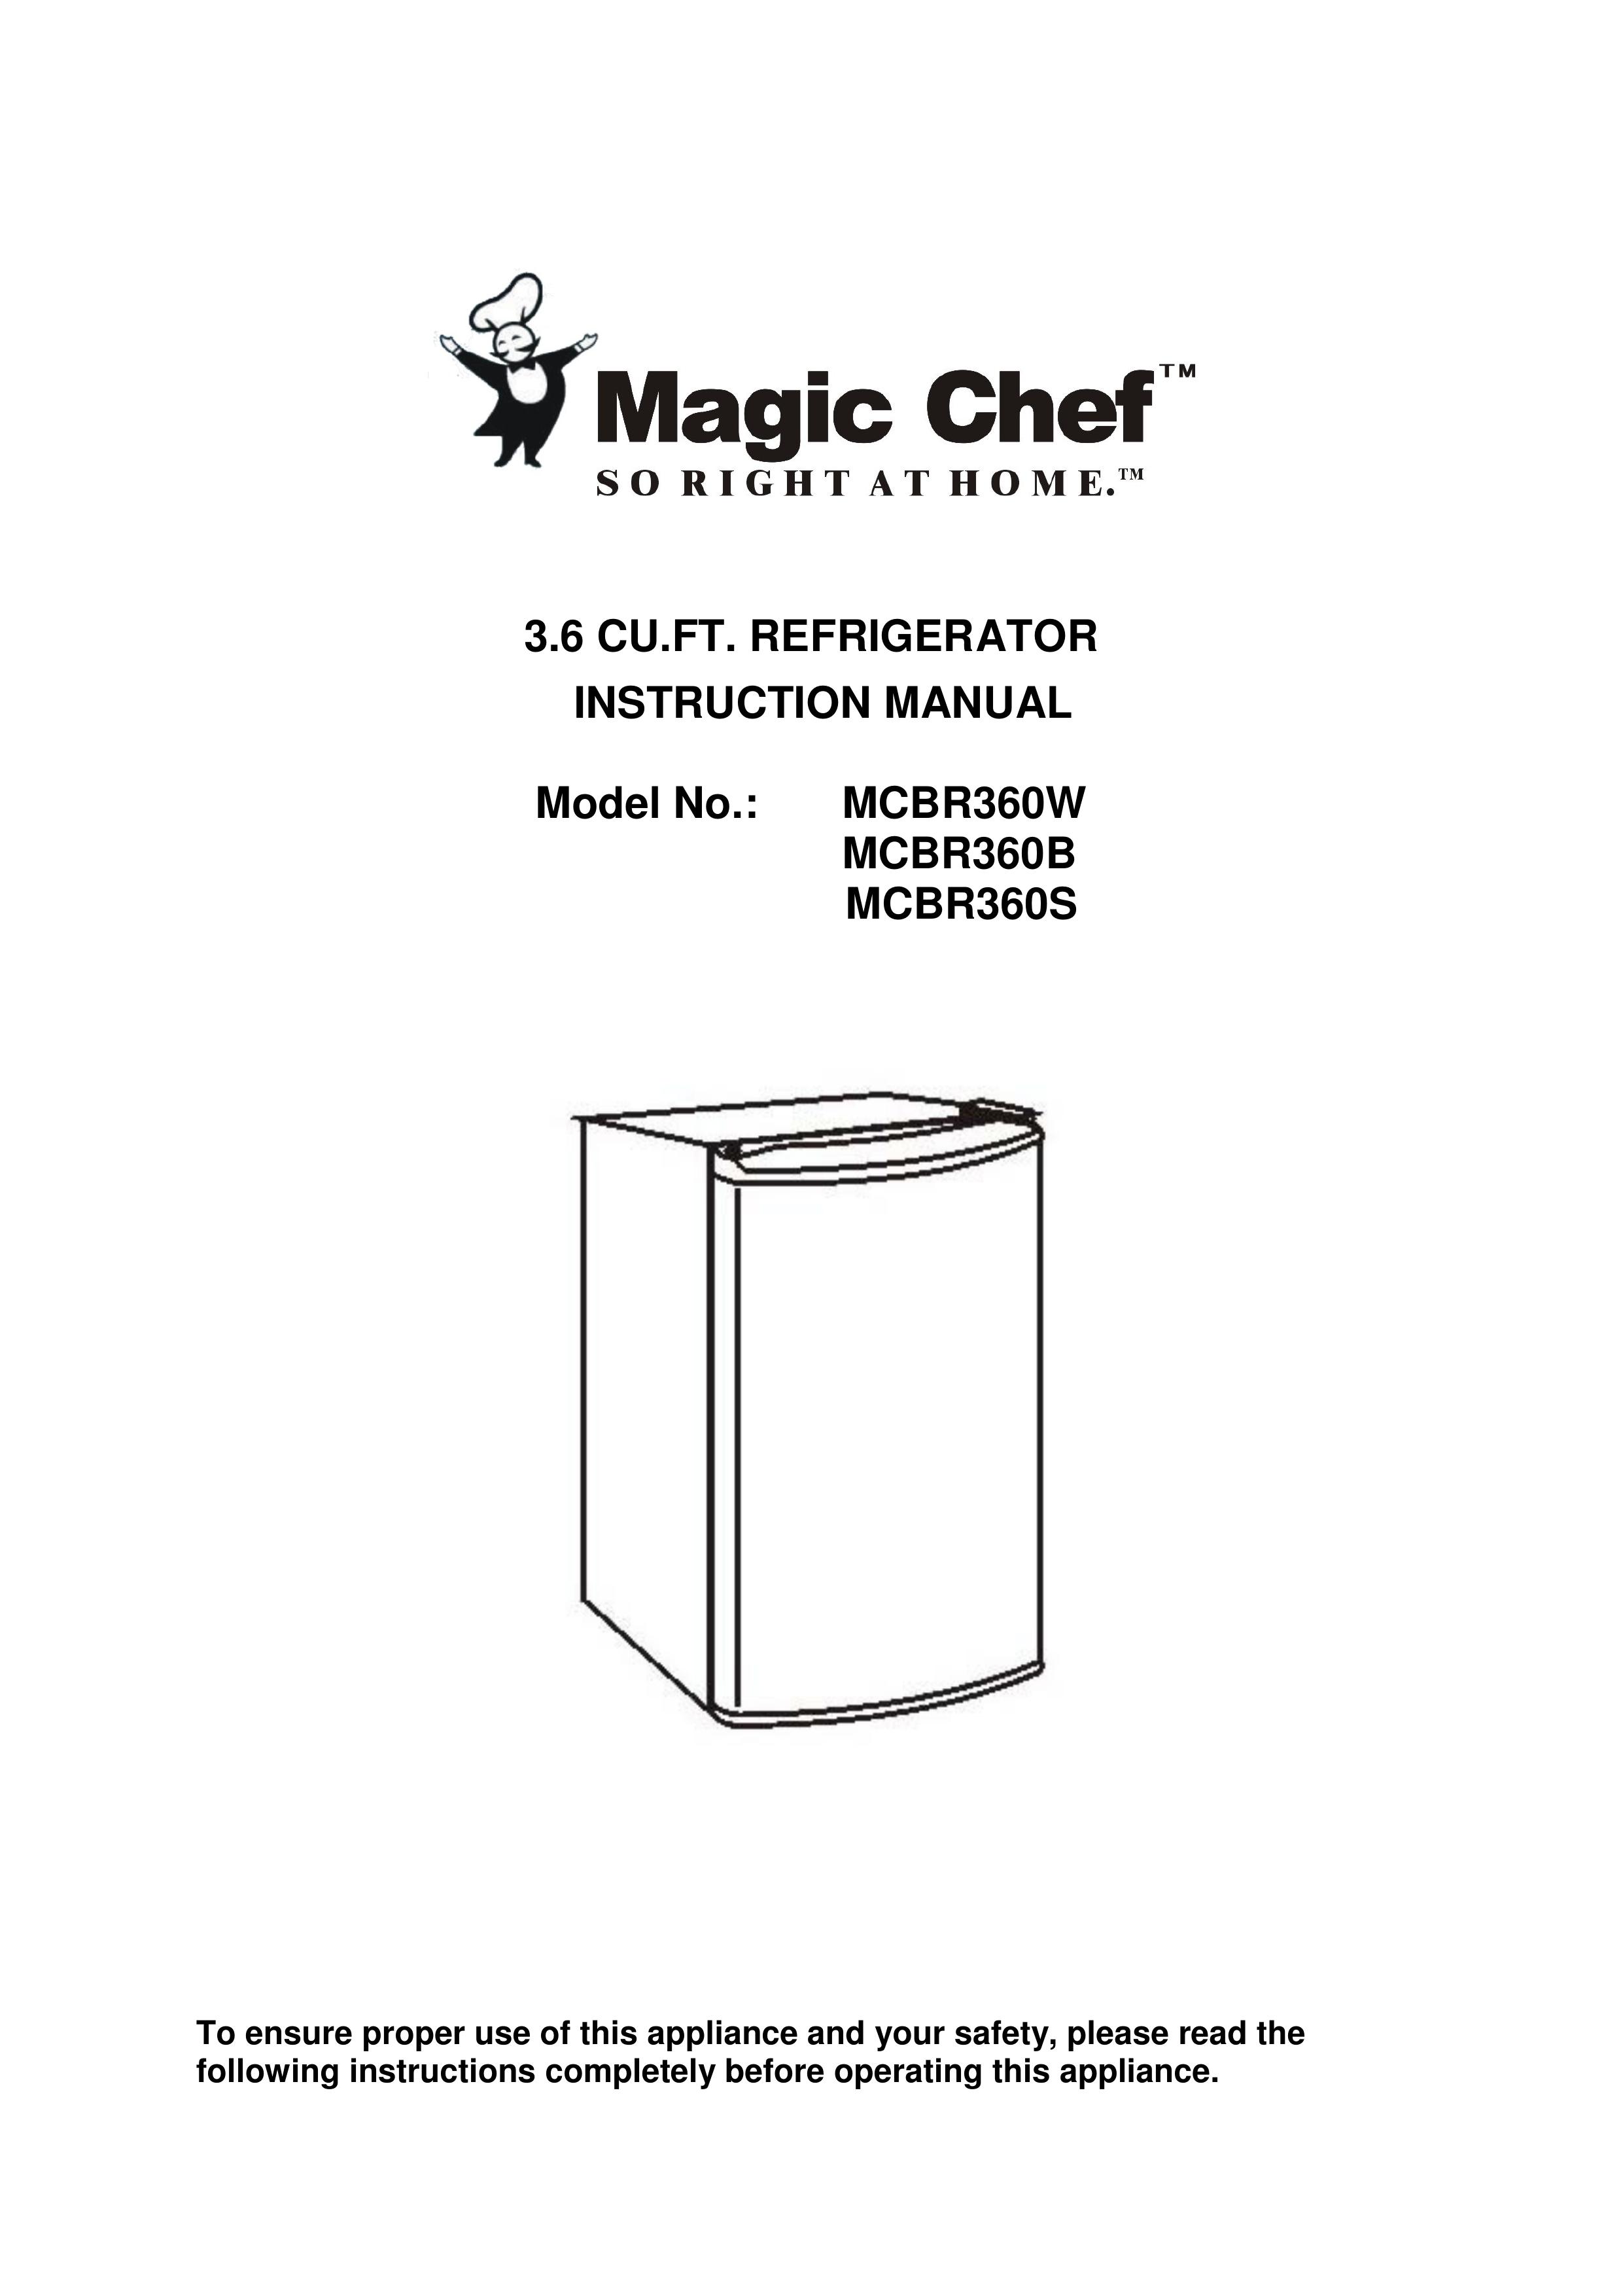 Magic Chef MCBR360B Refrigerator User Manual